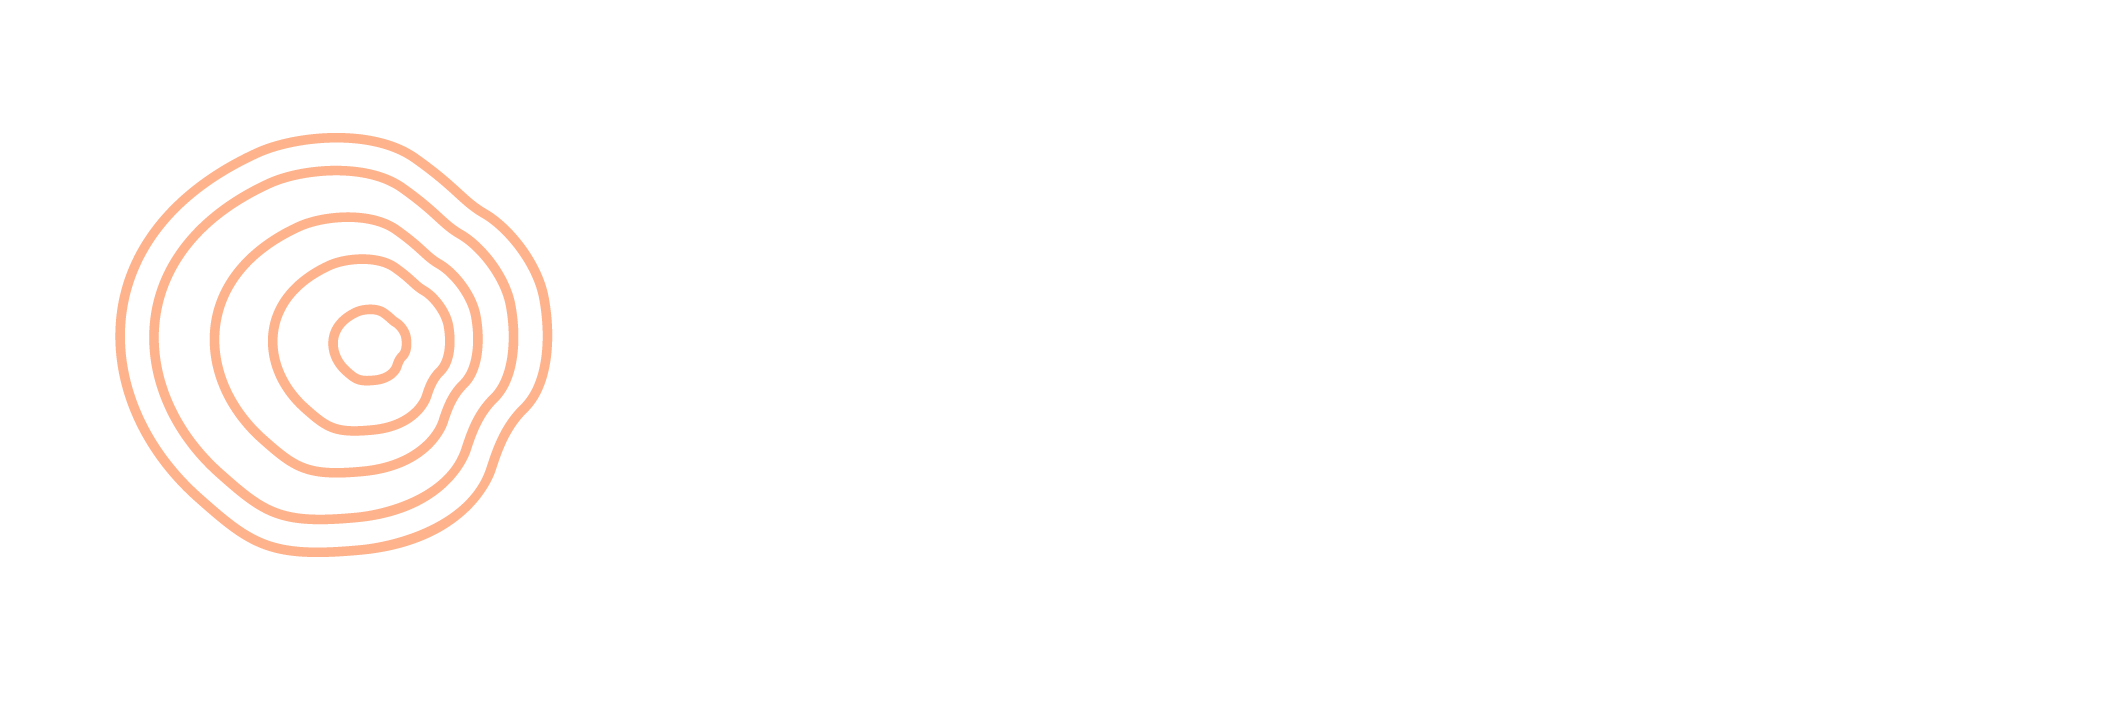 Skellefteå begravningsbyrå logotyp